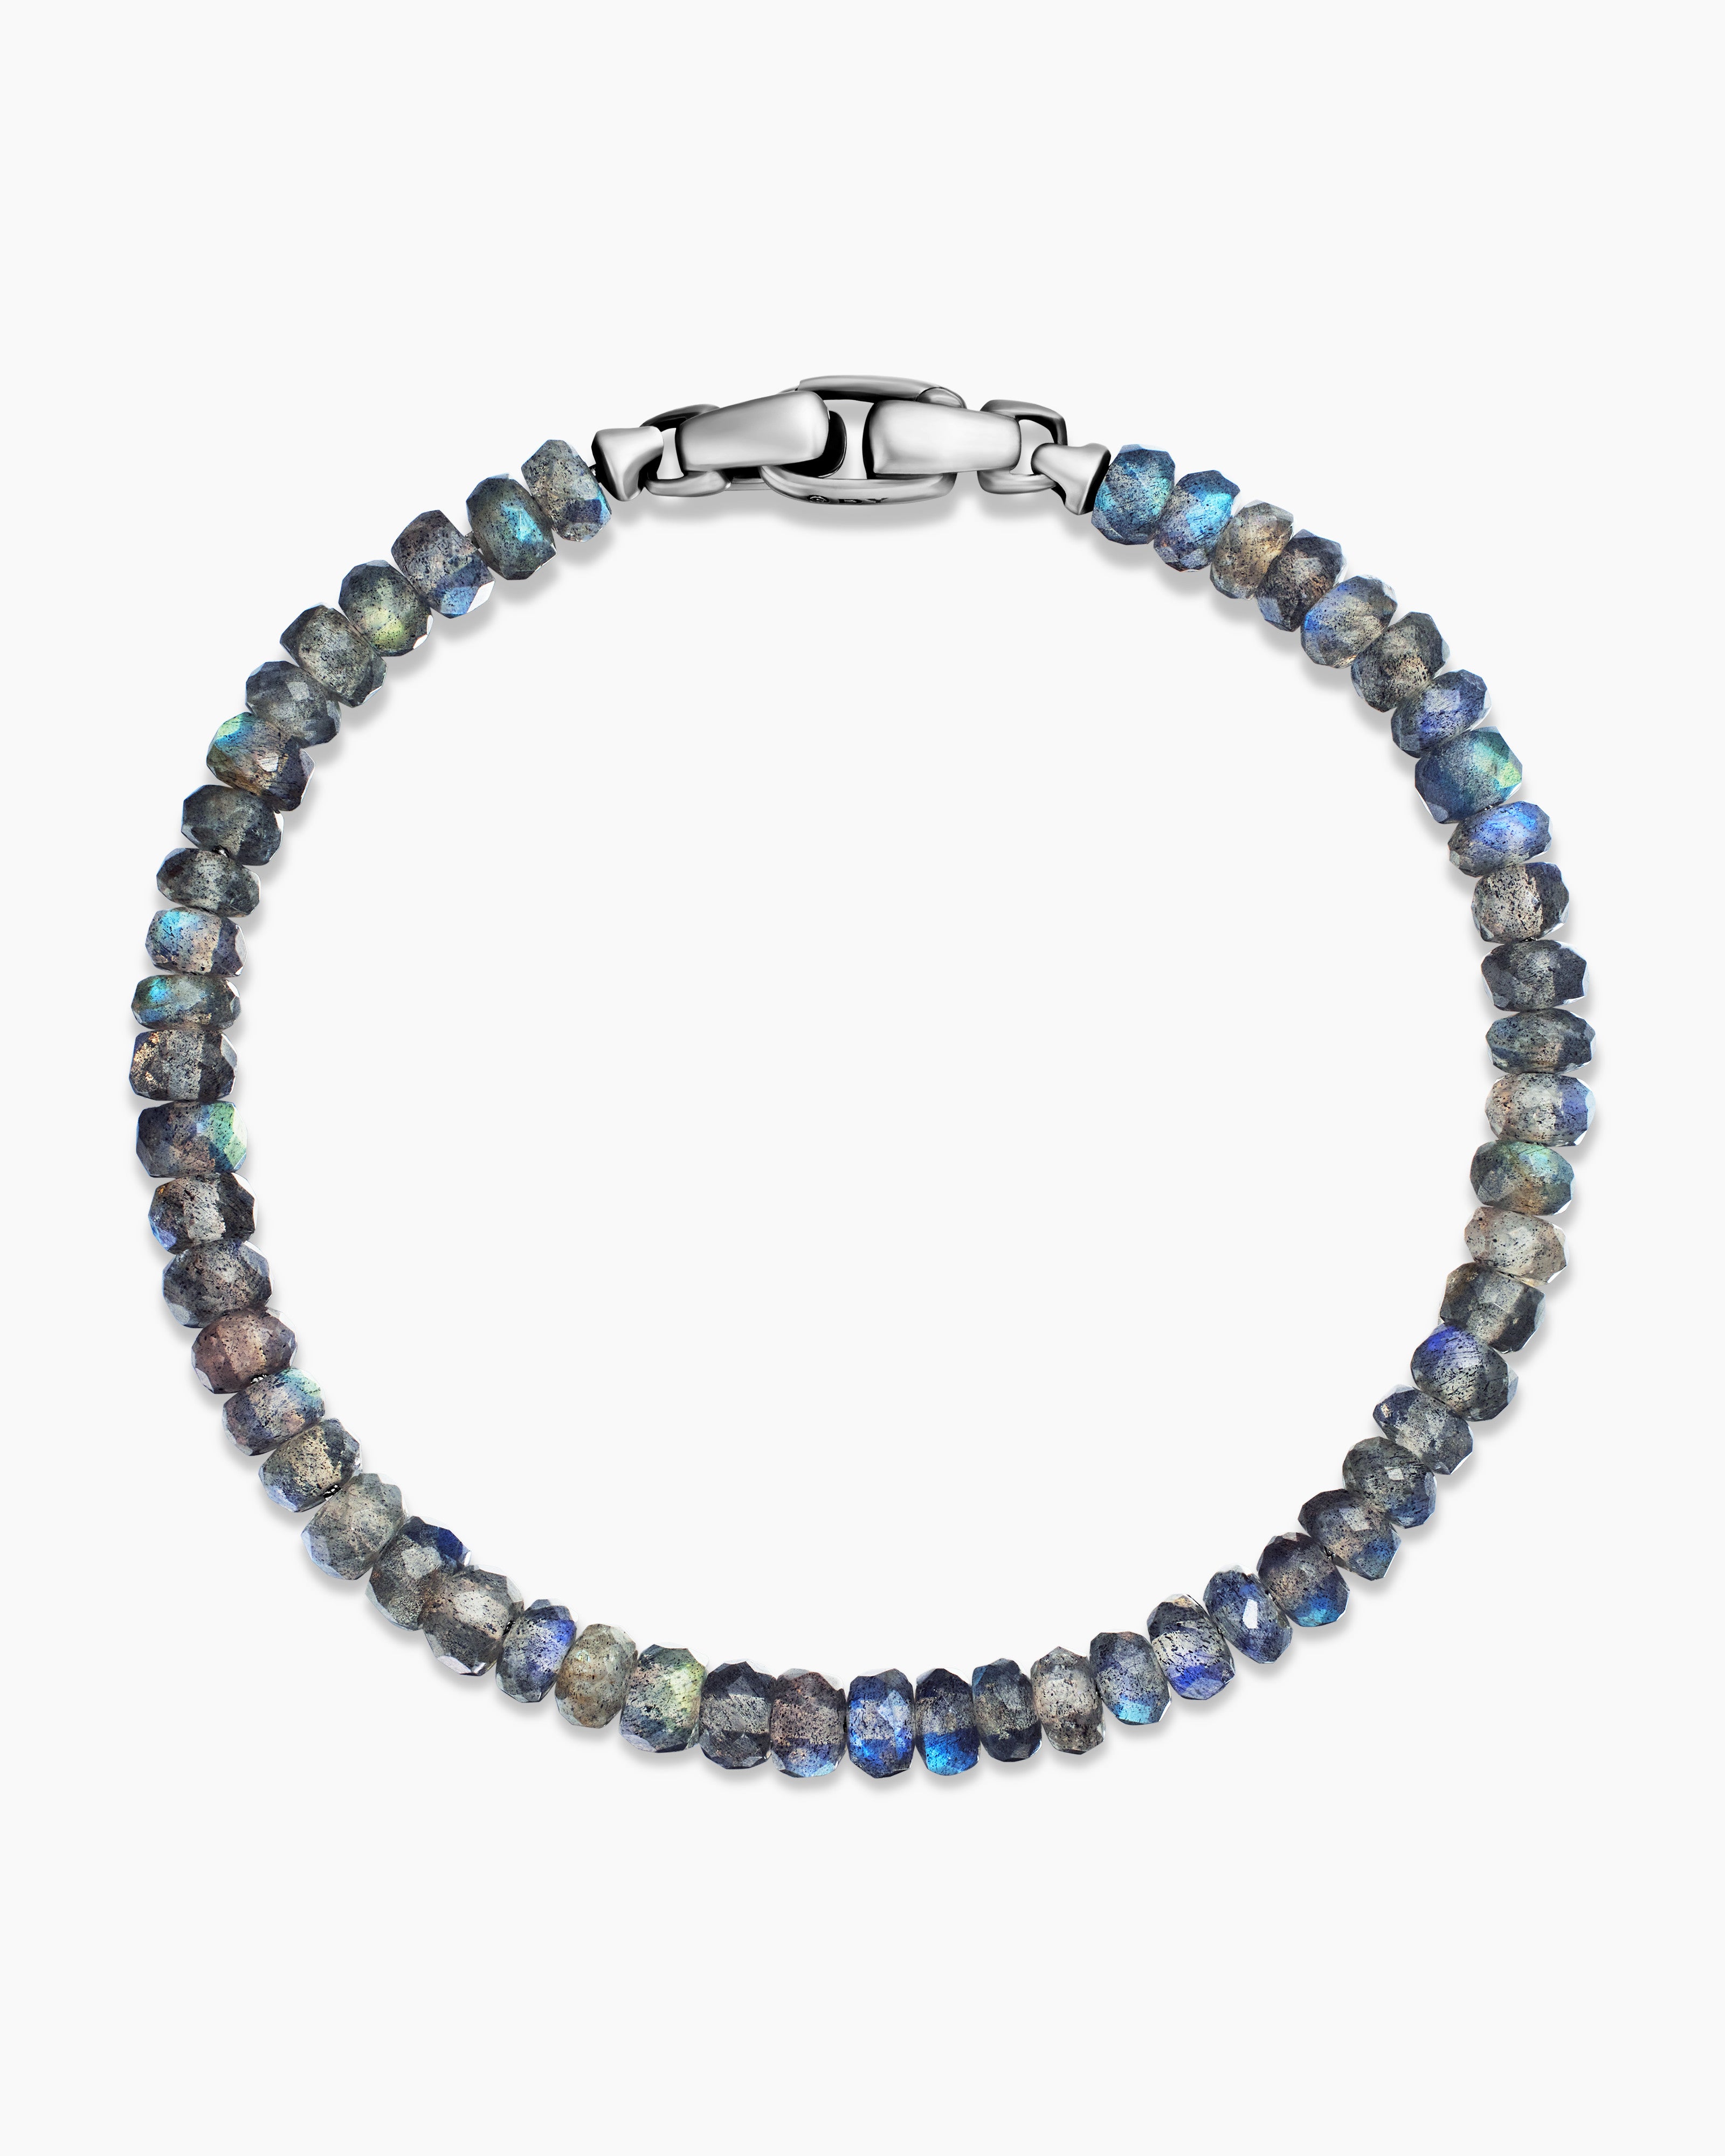 David Yurman Bead and Chain Quatrefoil Necklace with Labradorite, Milky  Aquamarine, and Iolite in Gold | Neiman Marcus